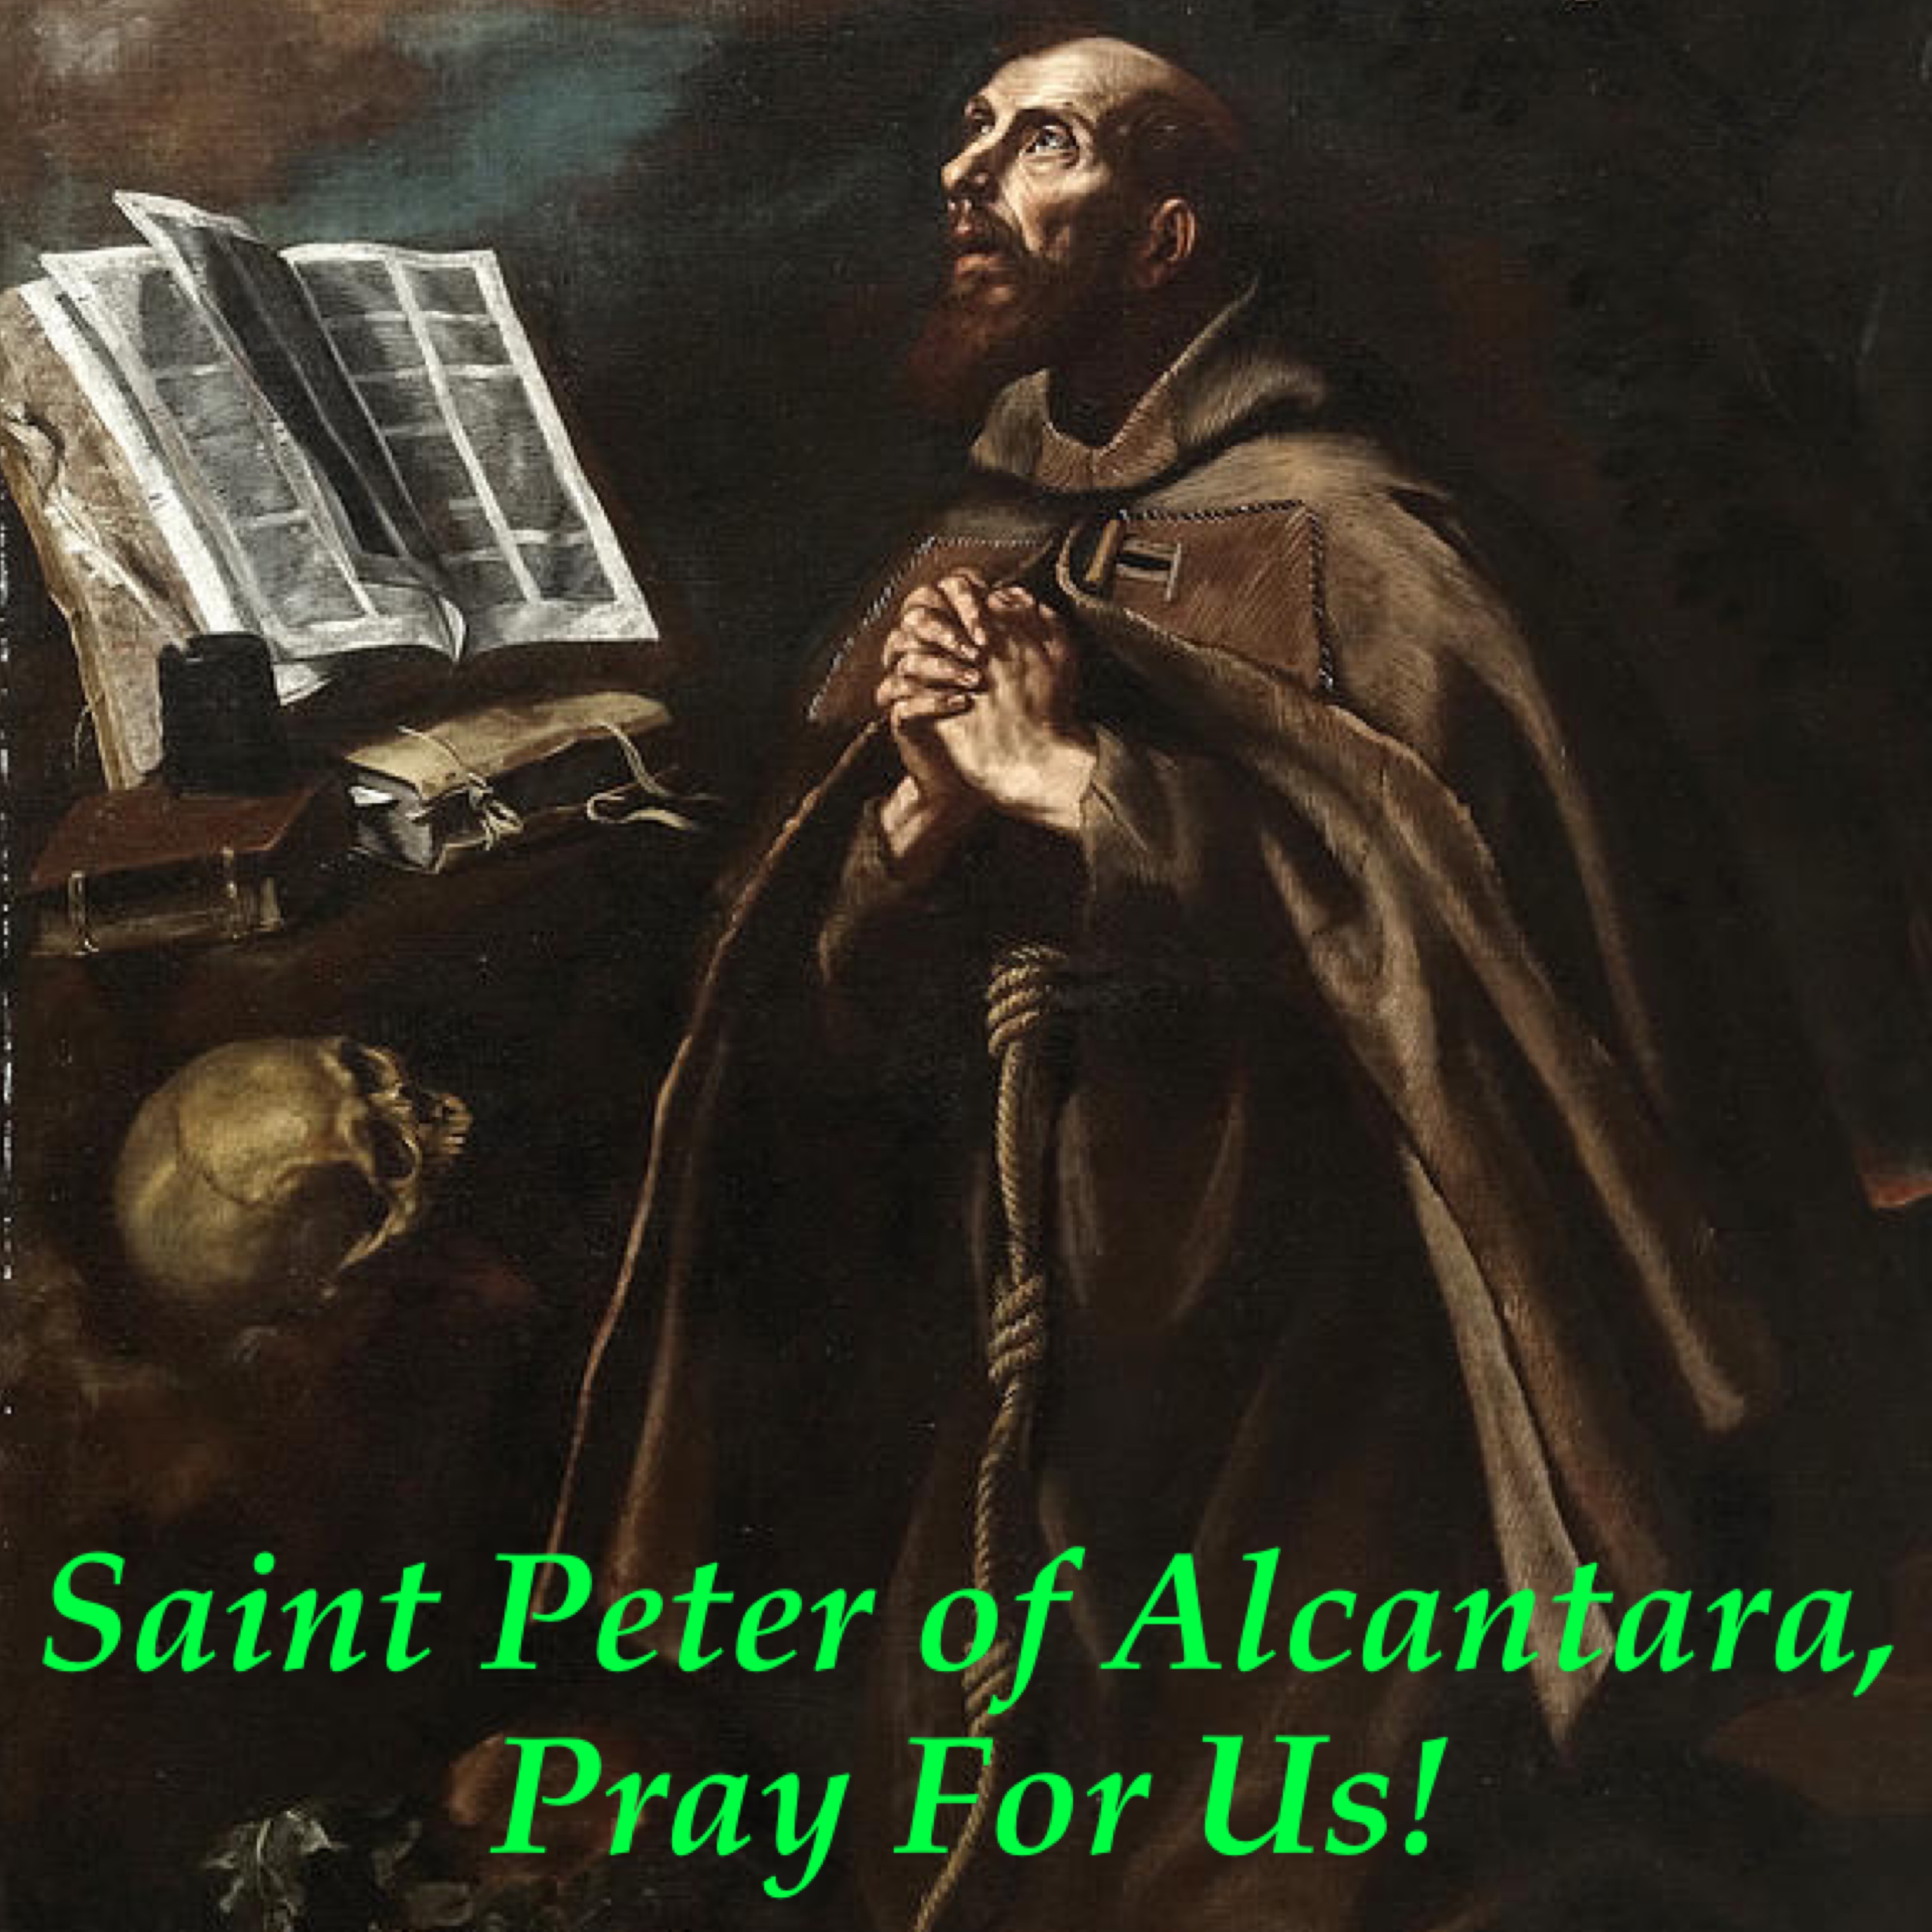 26th October - Saint Peter of Alcantara